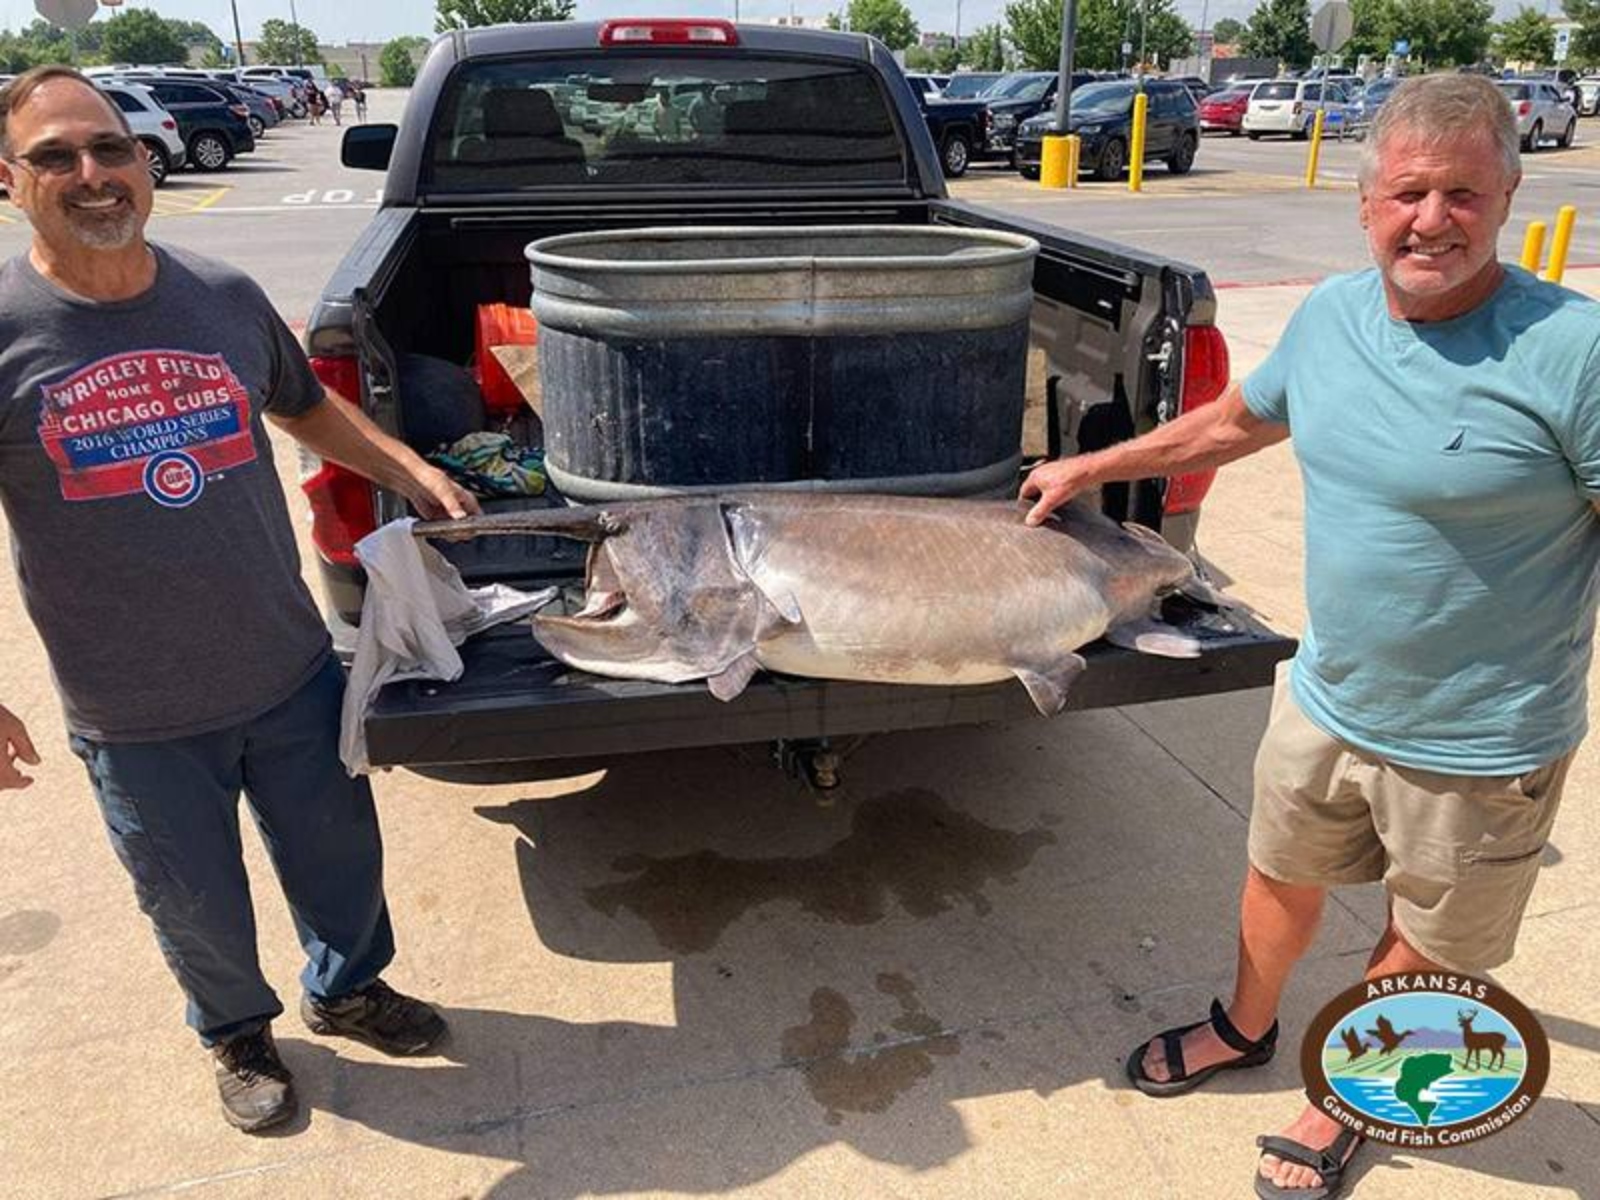 Arkansas state fishing record for paddlefish